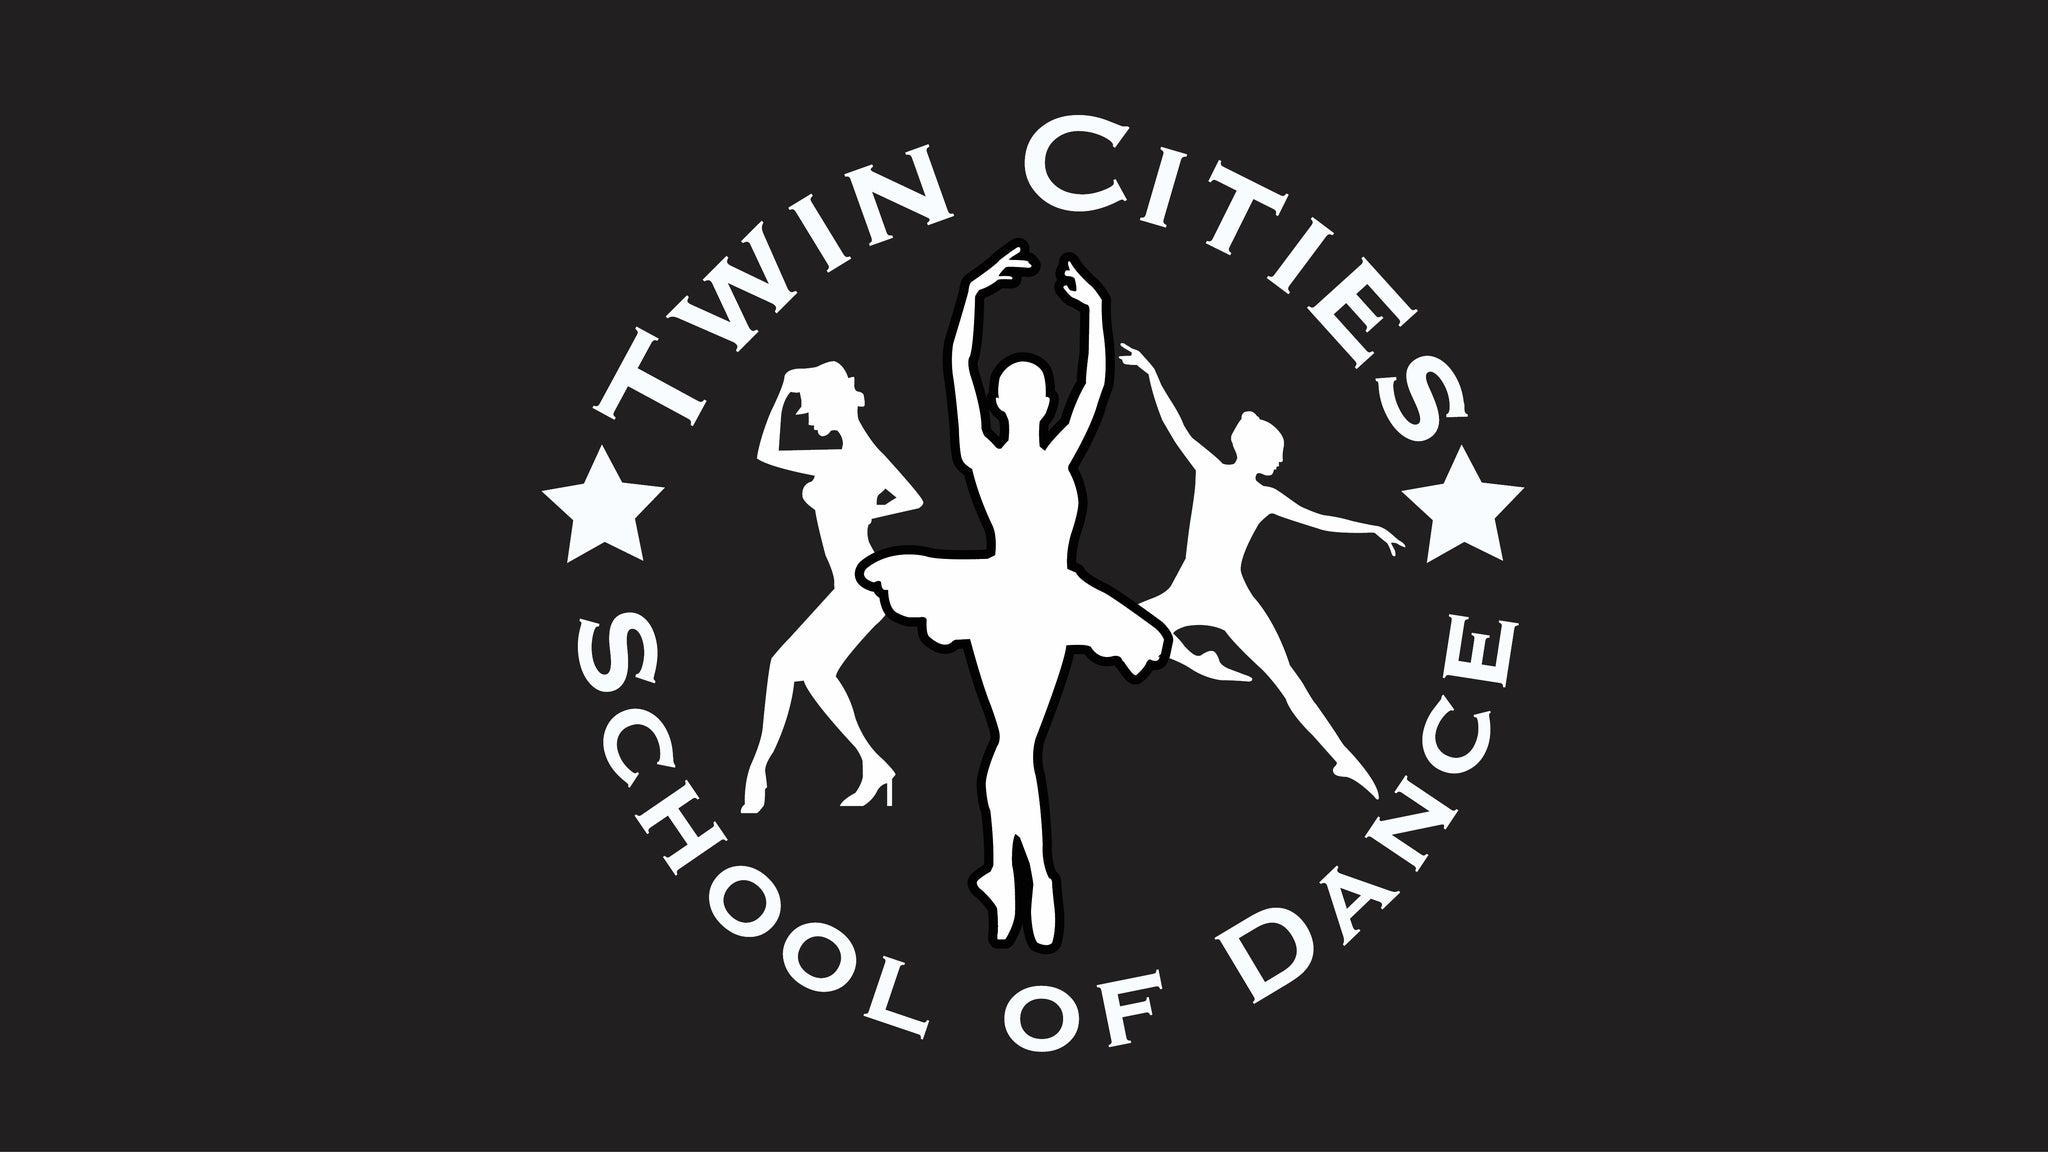 Twin Cities School of Dance: Peace, Love, Dance